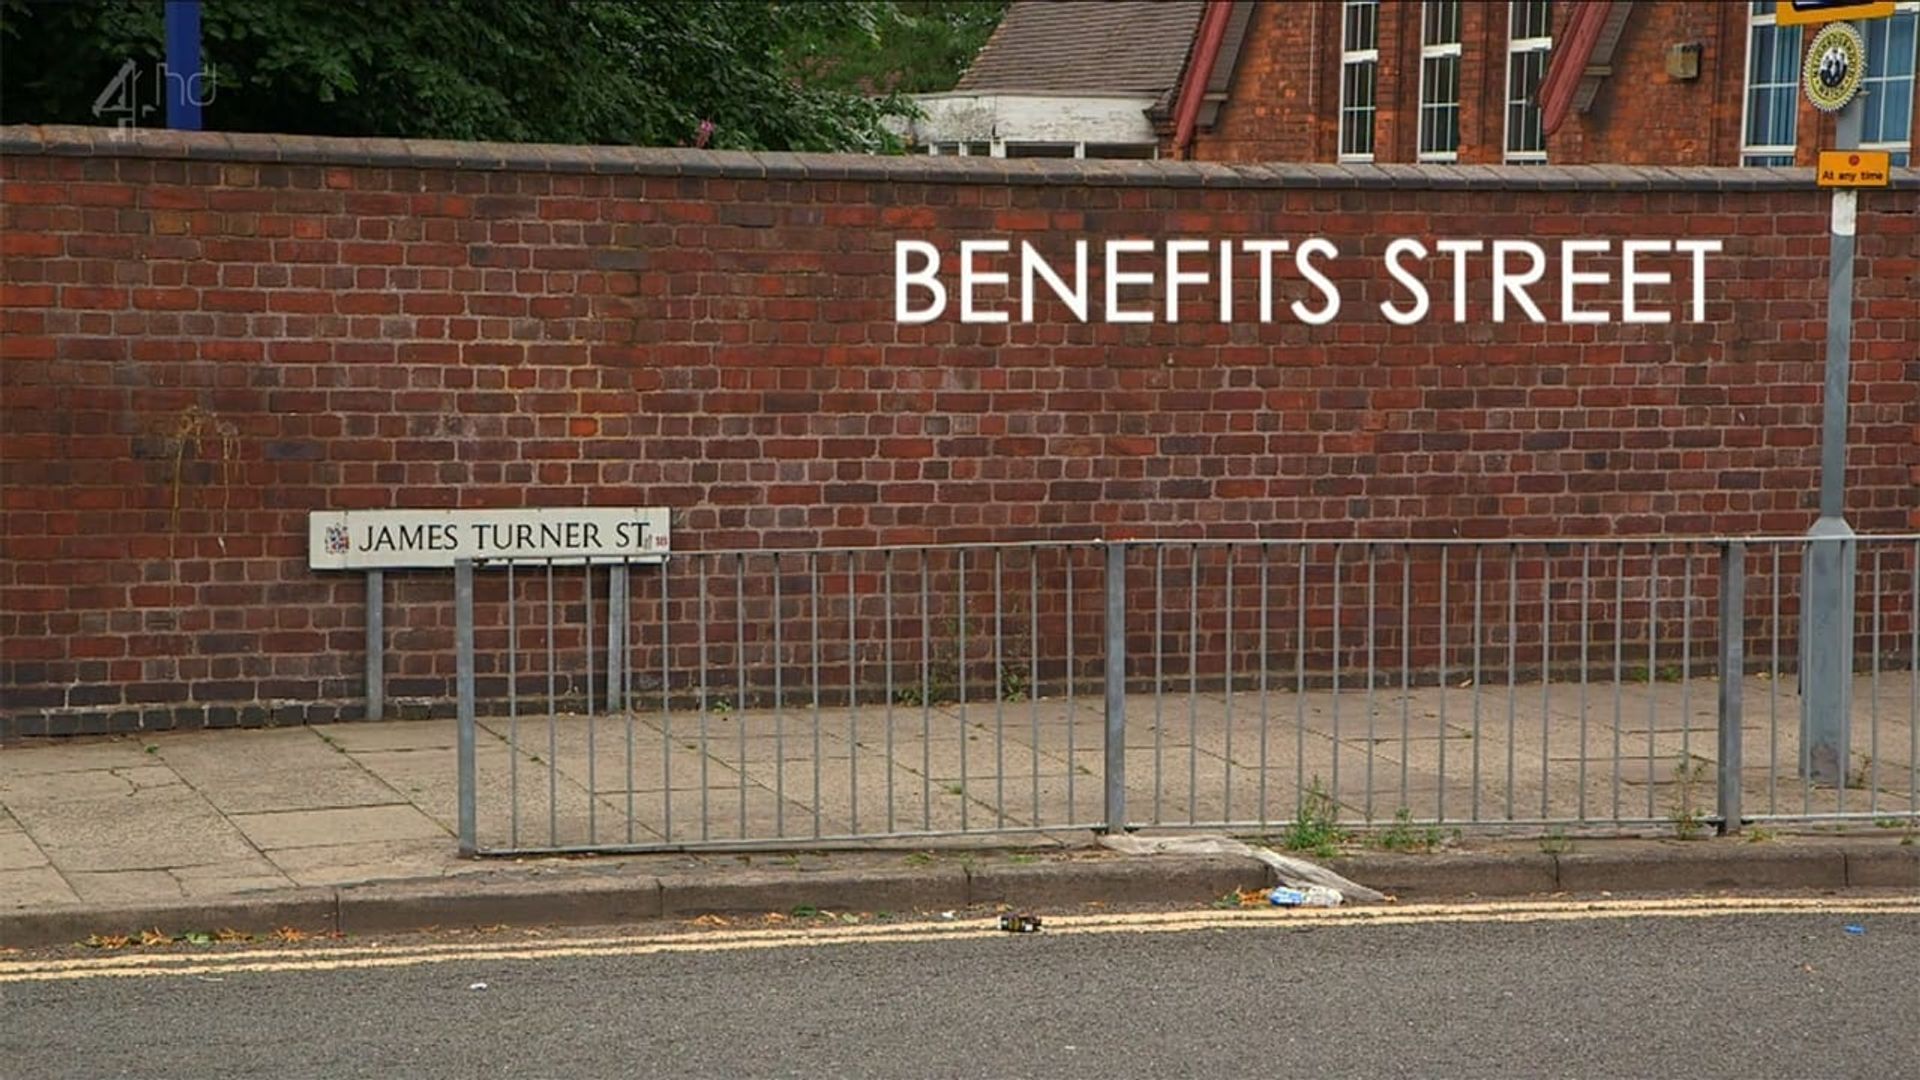 Benefits Street background